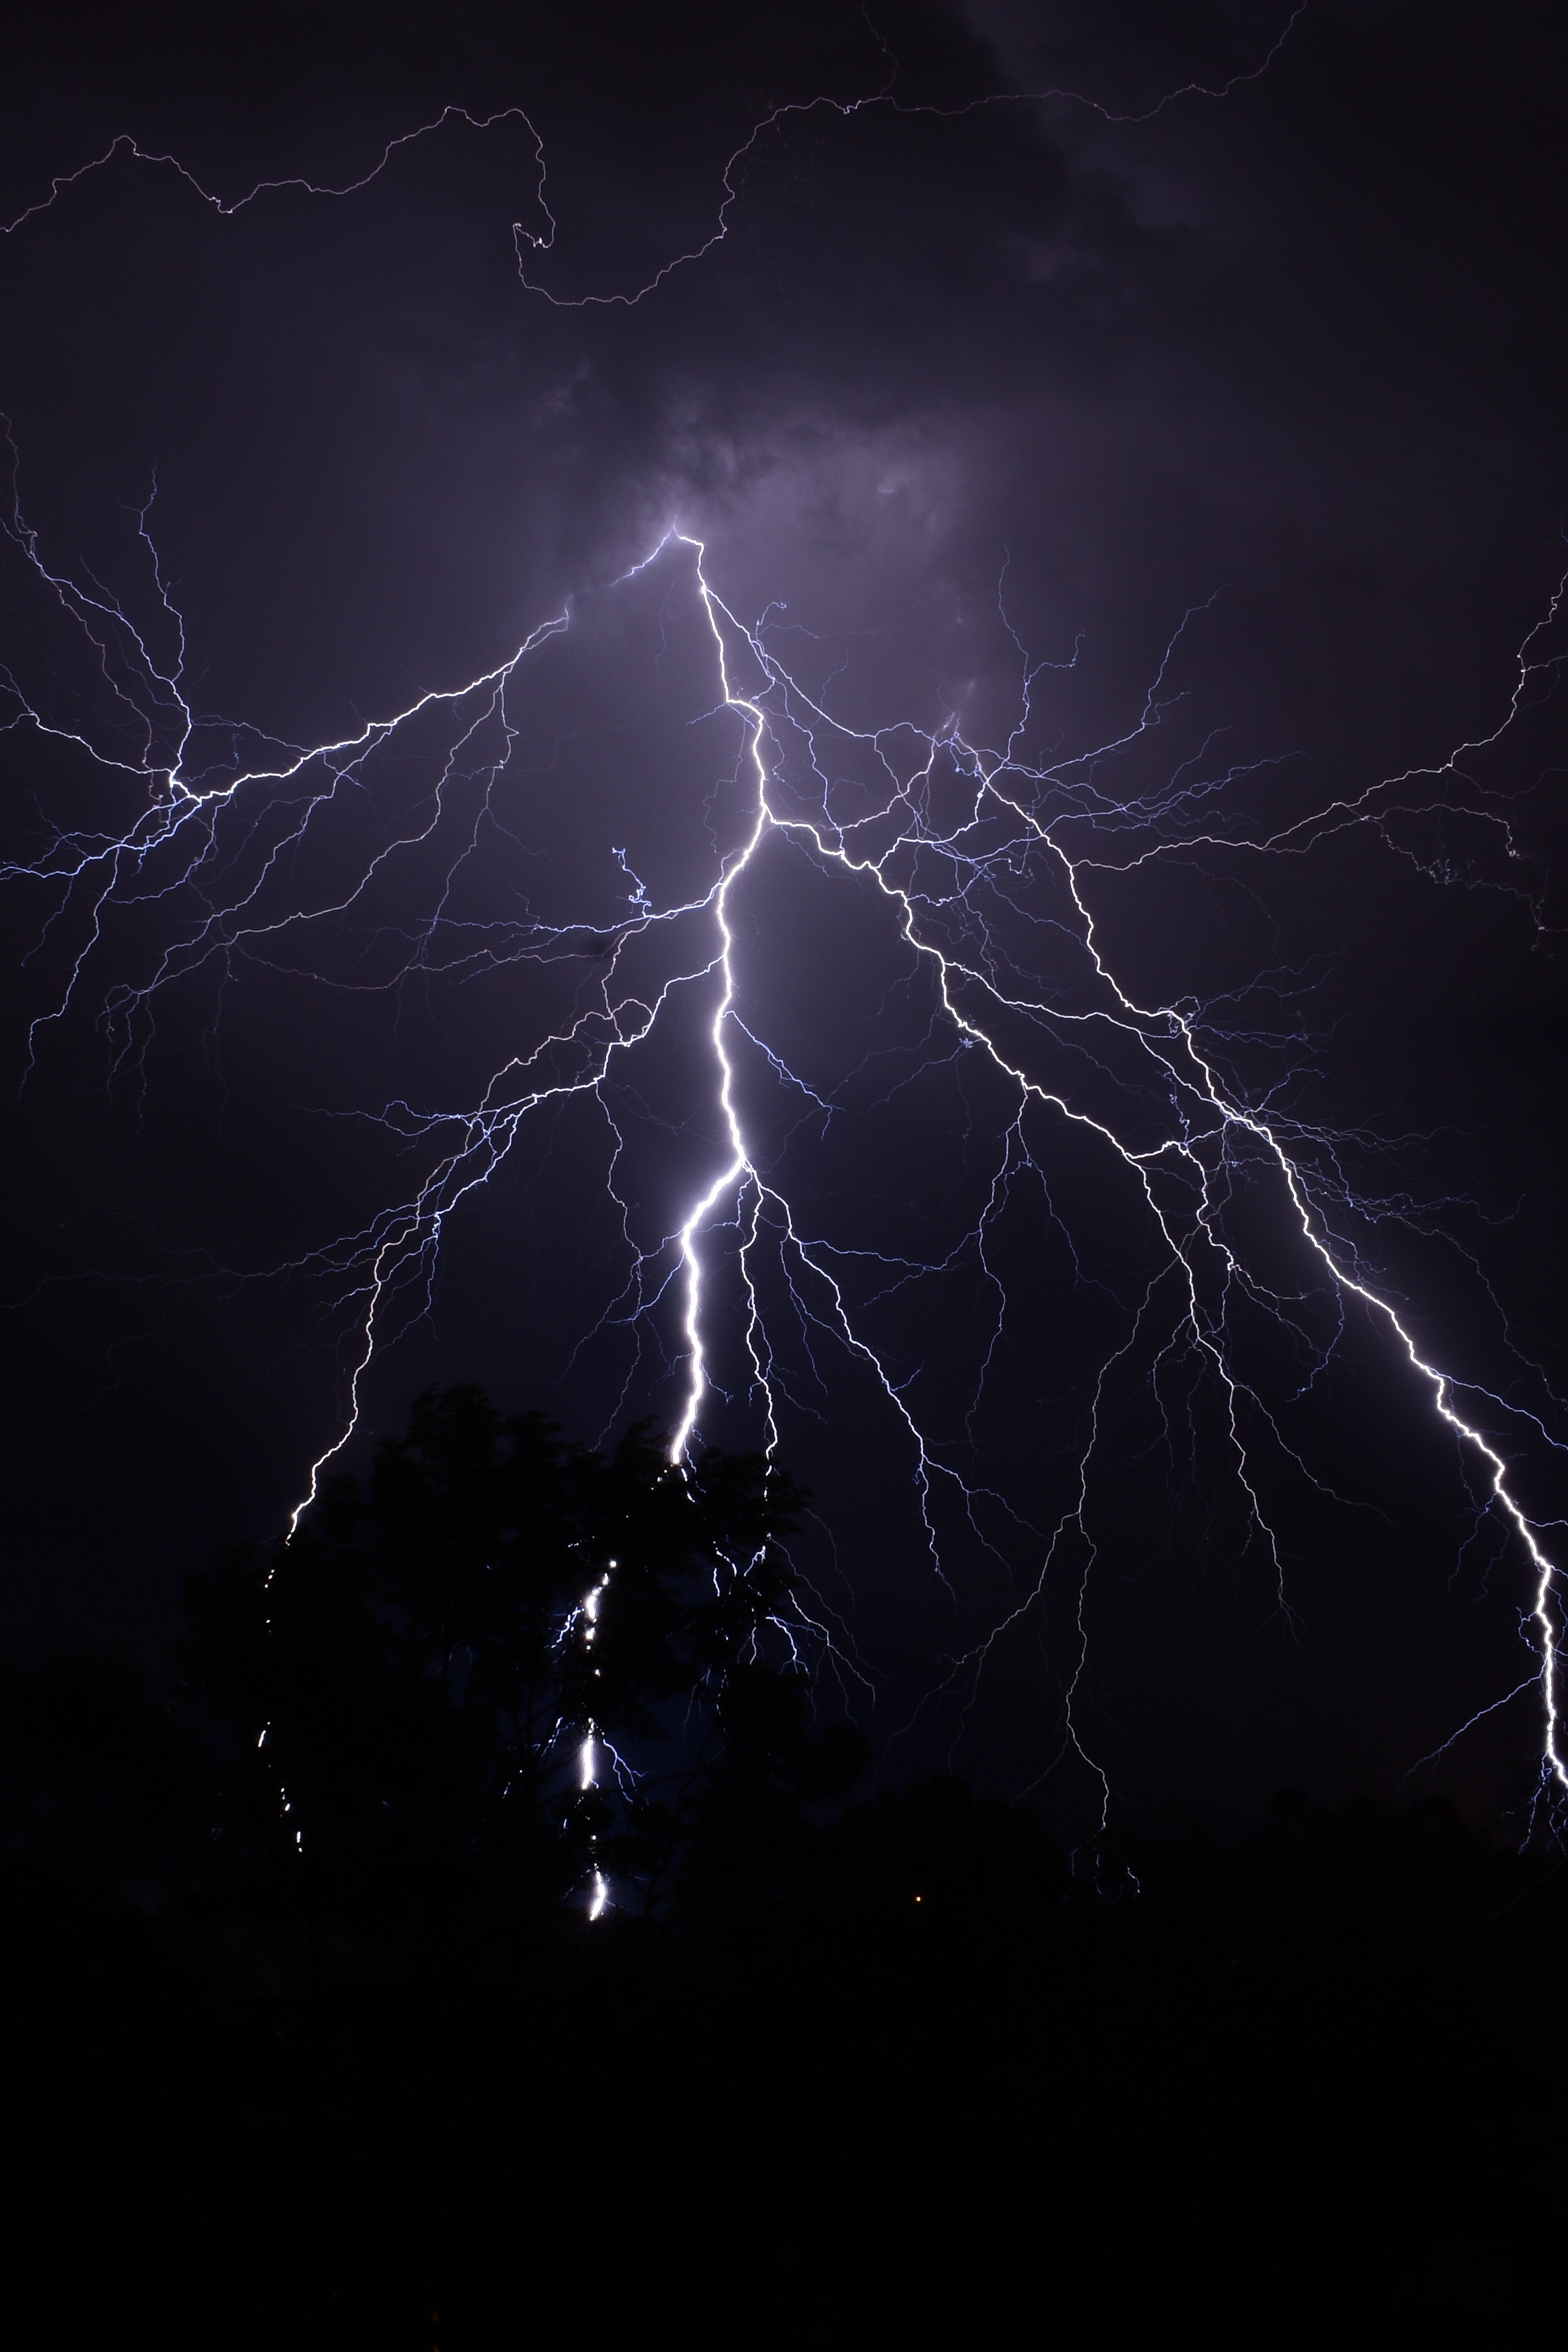 A group of lightning bolts strike in the sky - Lightning, storm